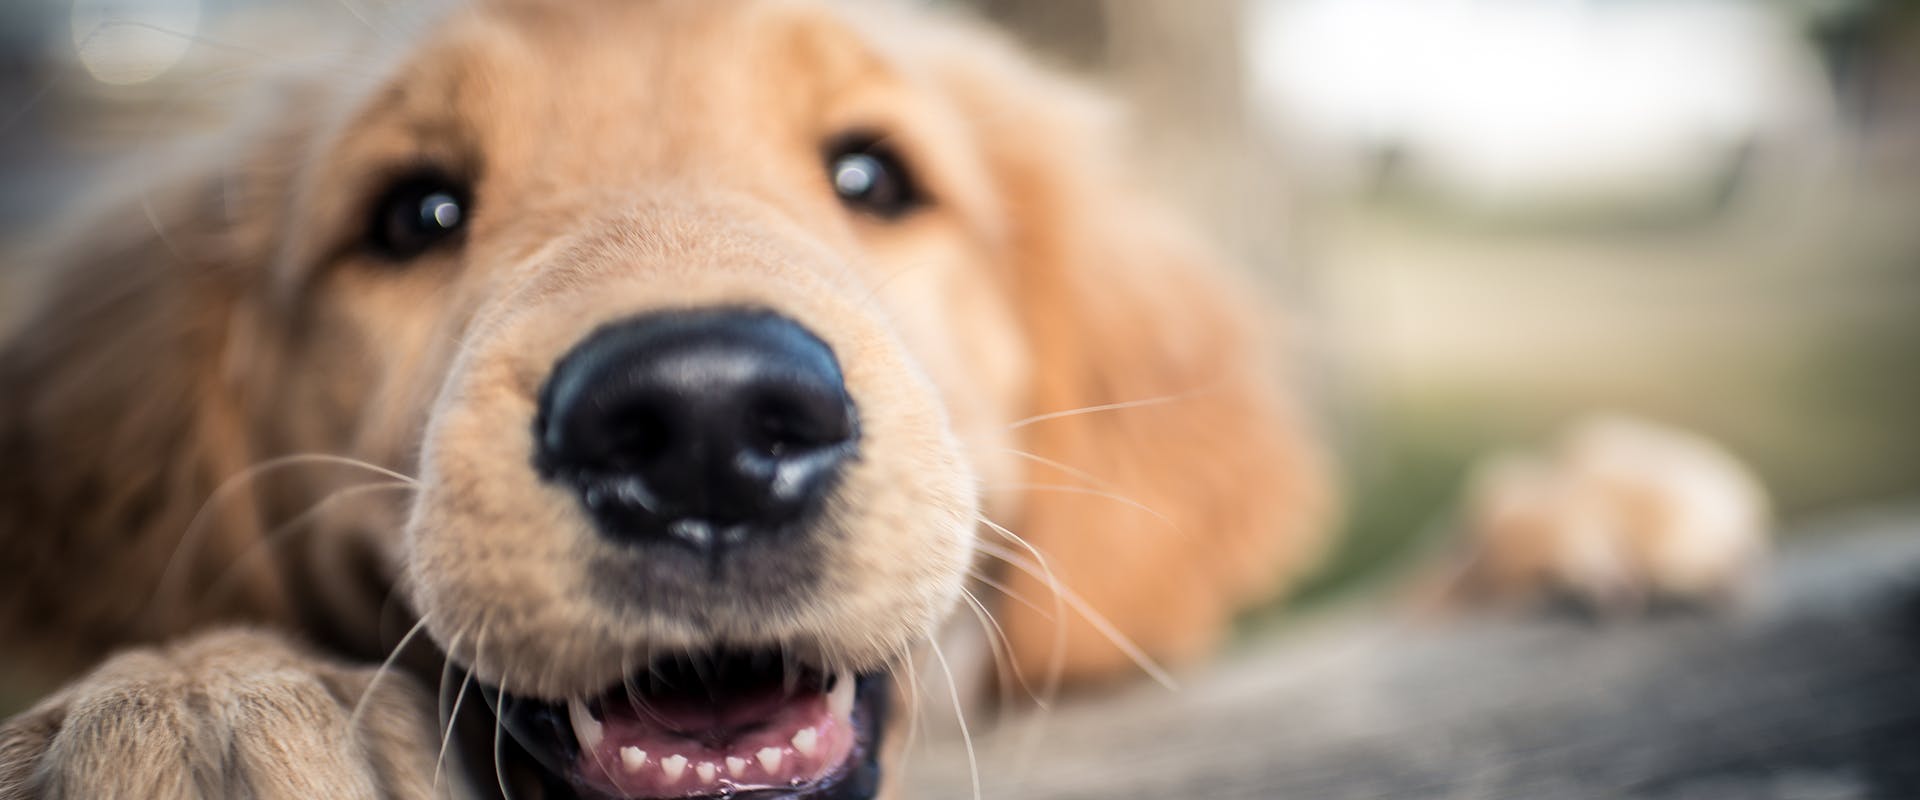 A close up of a Golden Retriever puppy